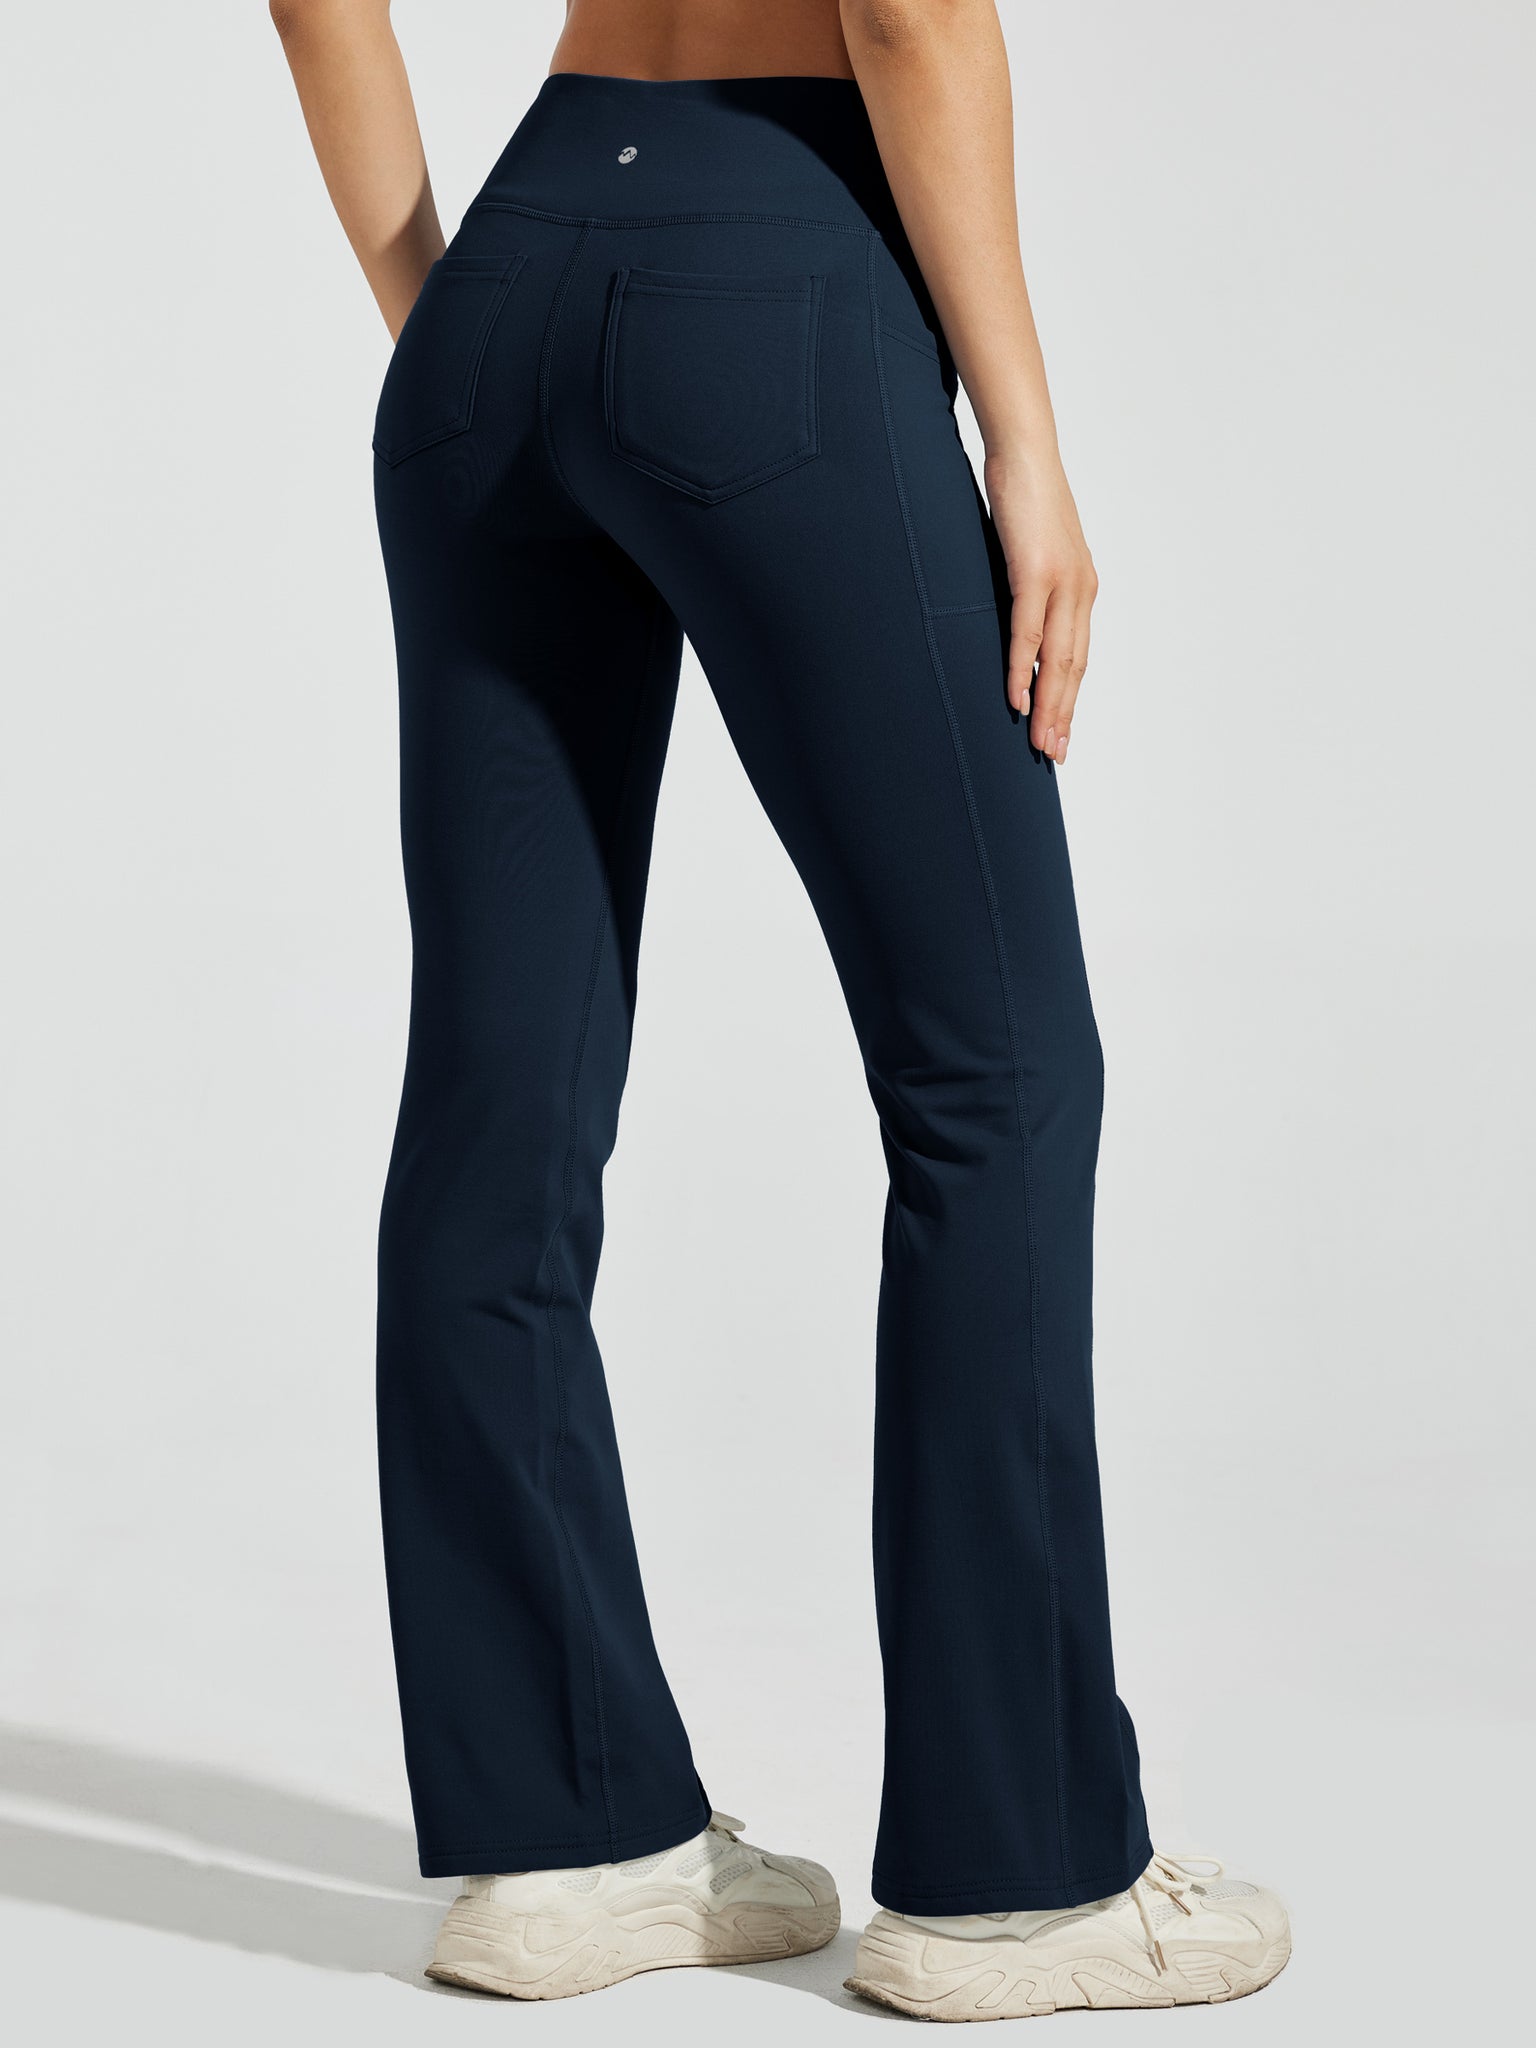 Women's Fleece Lined Bootcut Yoga Pants_DeepBlue_model1